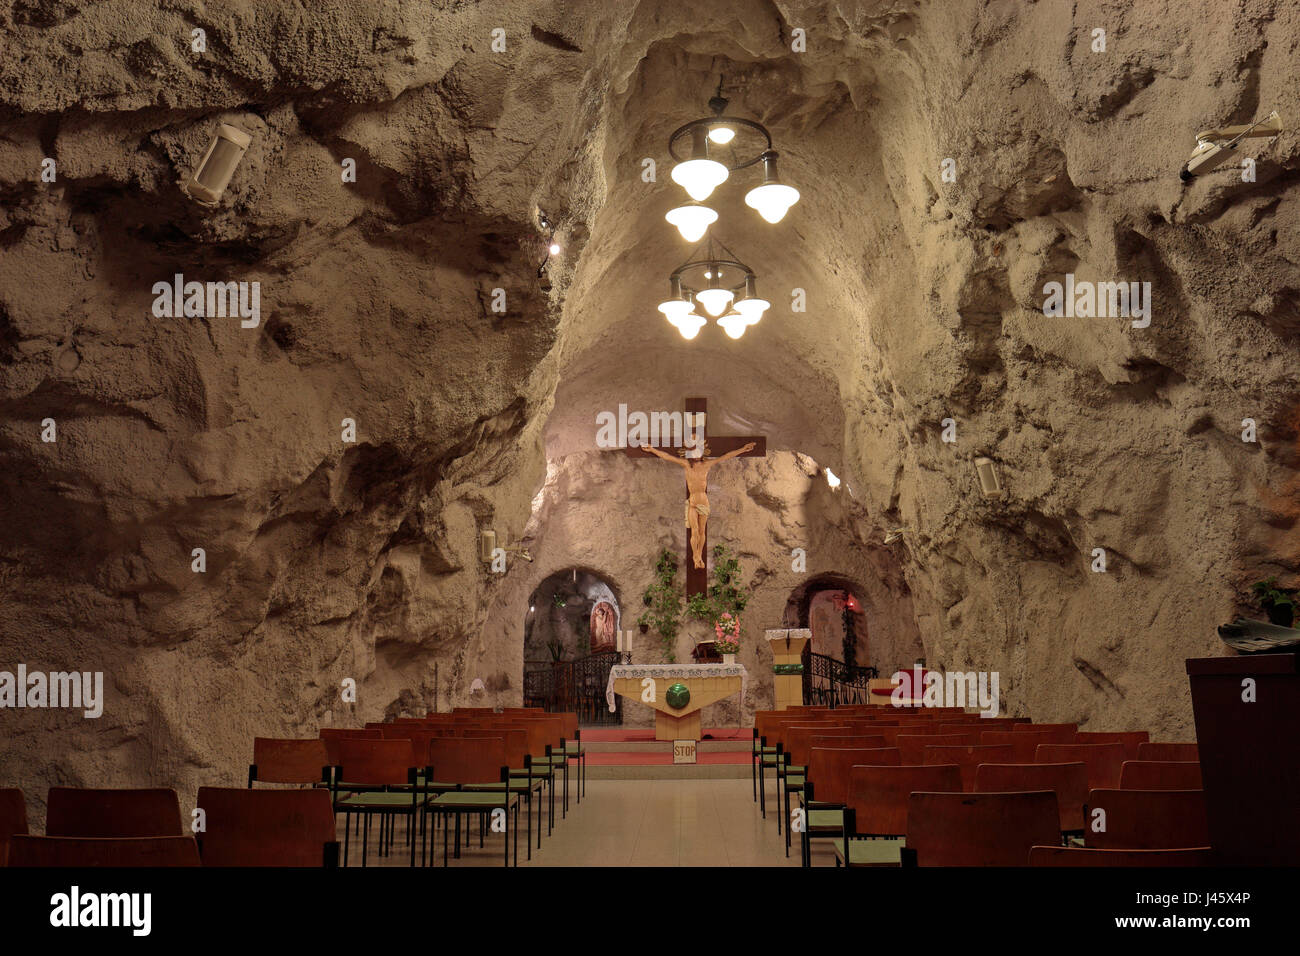 The Cave Church, inside Gellért Hill, in Budapest, Hungary. Stock Photo